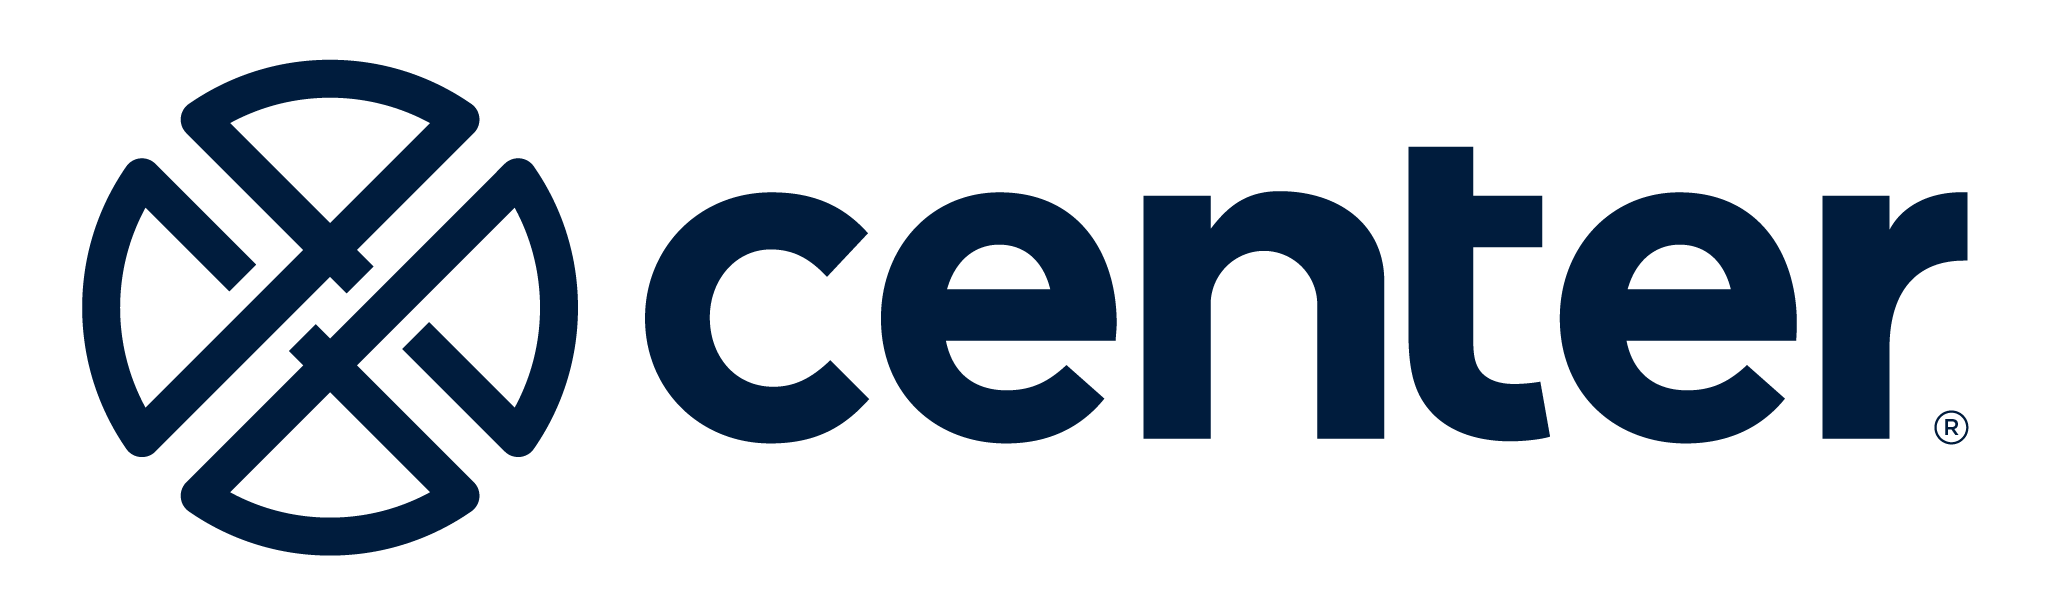 Center logo